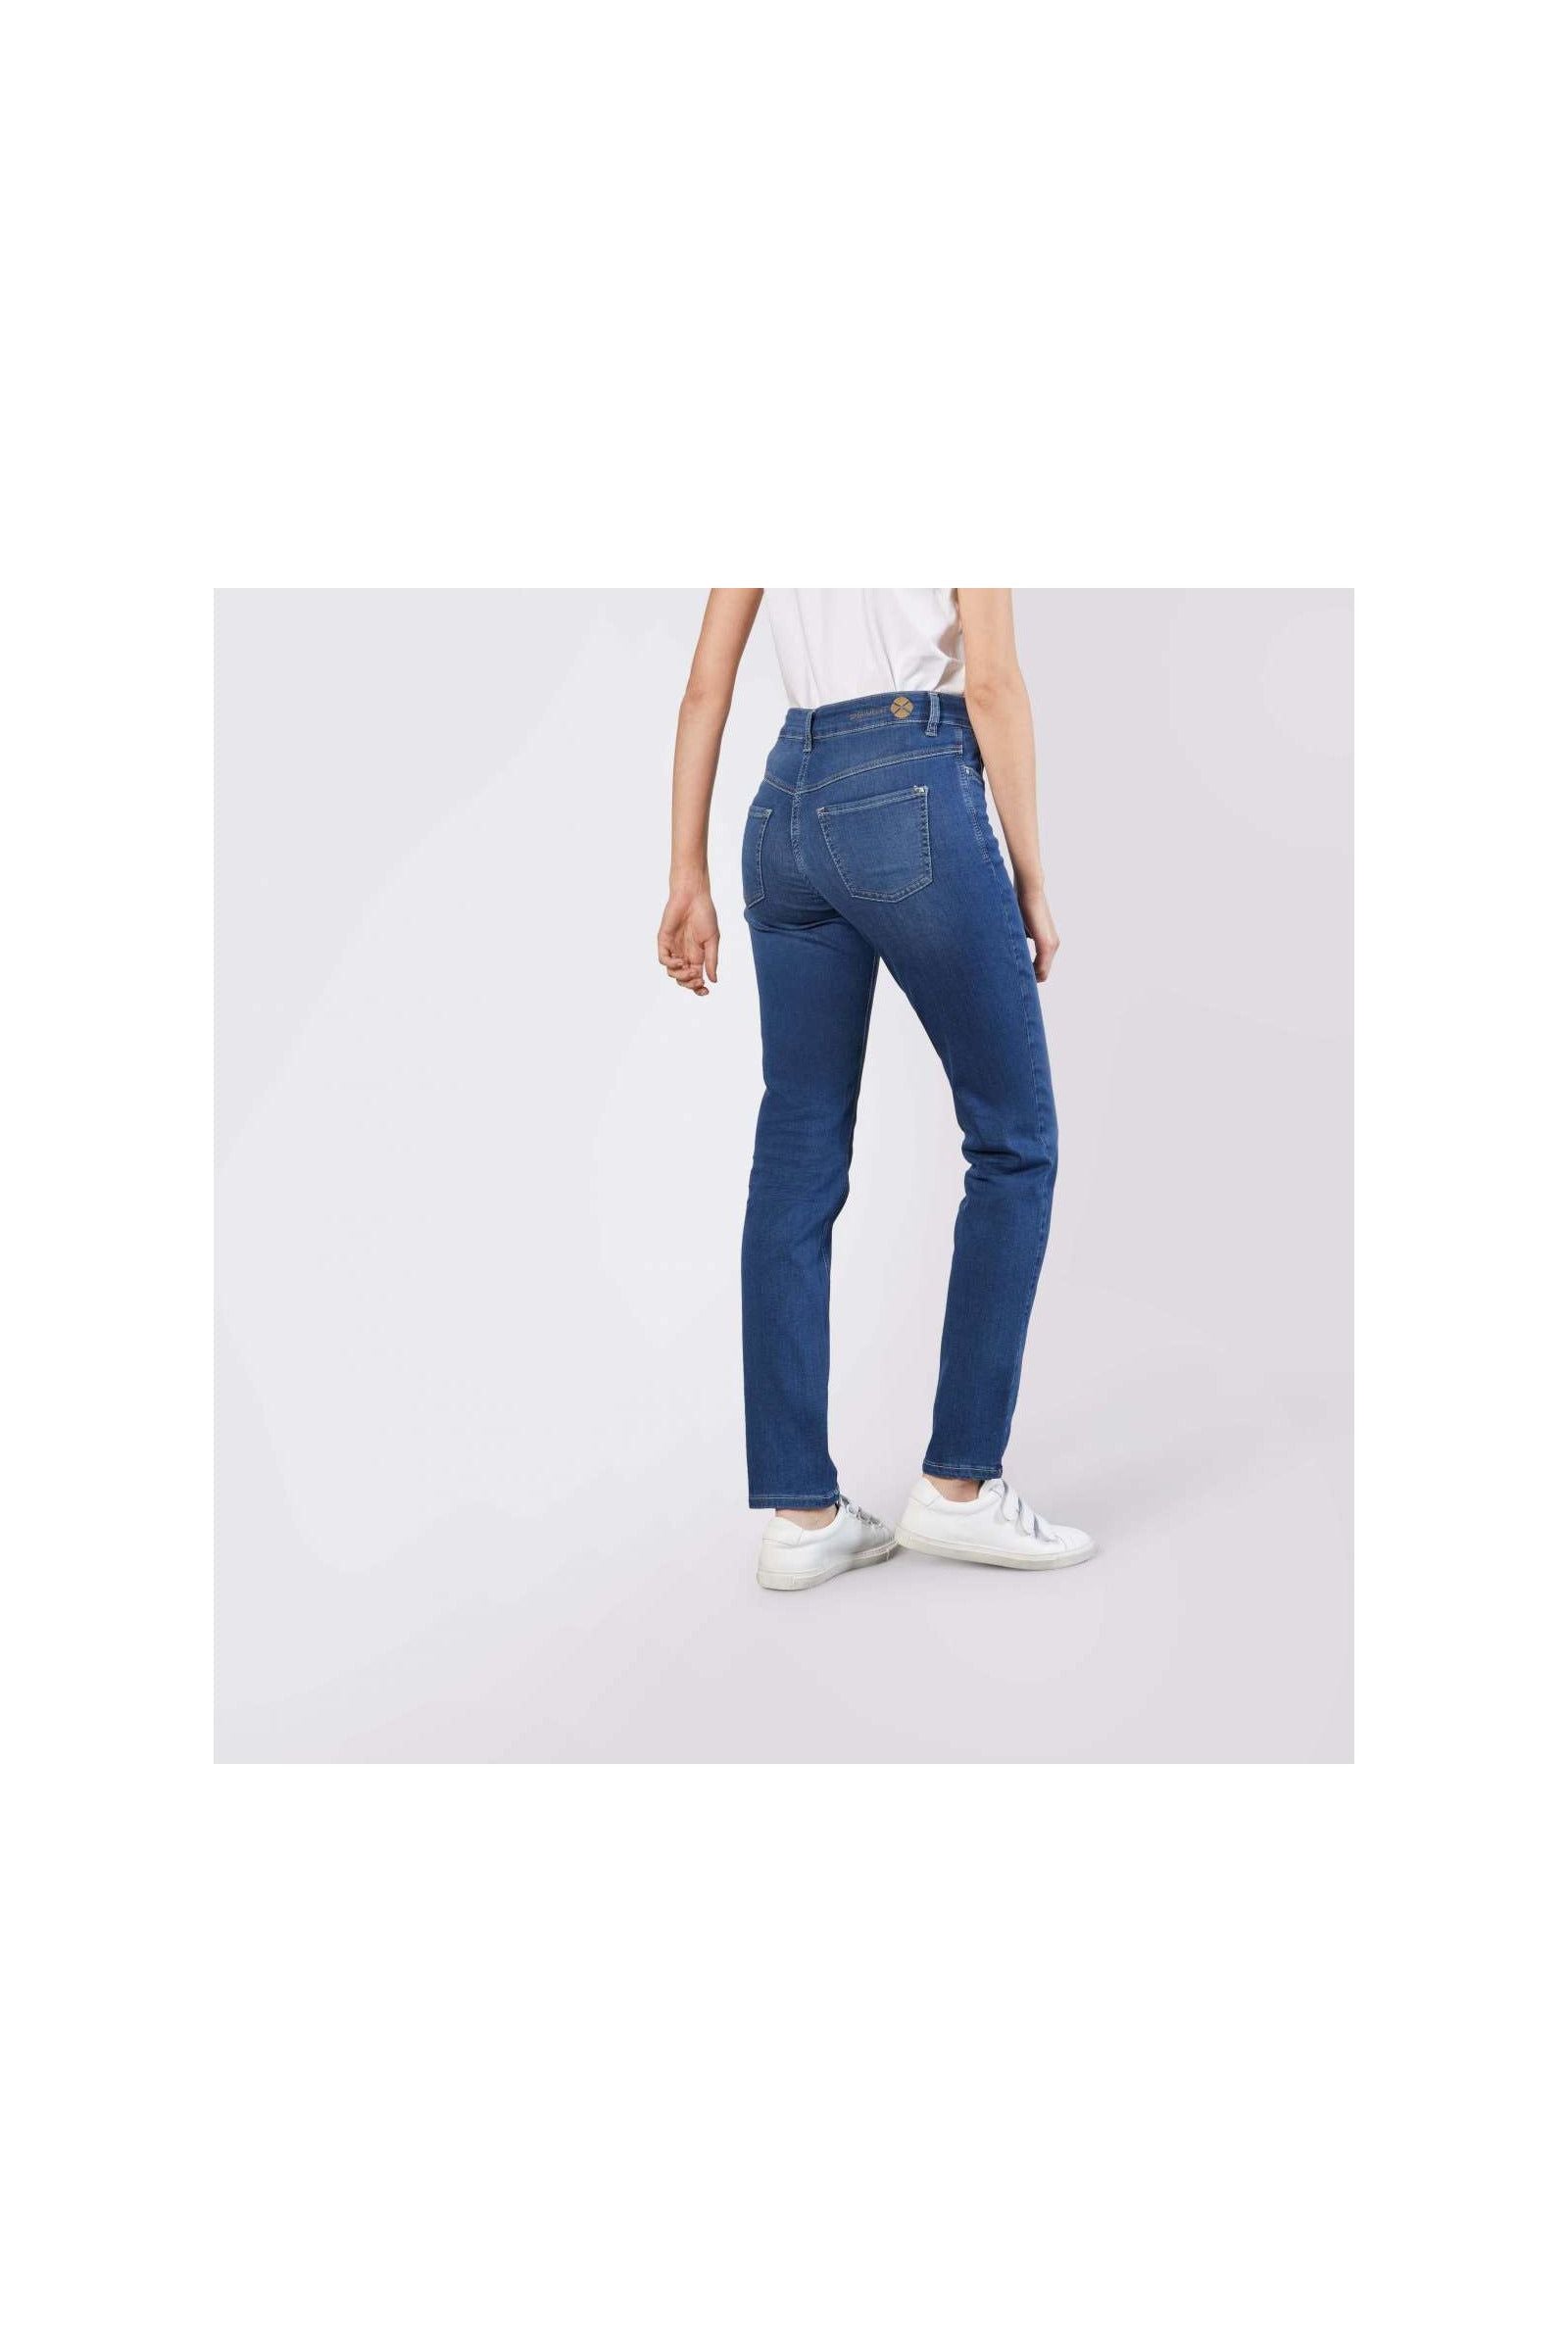 D569 Straight – Blue Jeans Denim Robertson Authe Mid 5401-90-355L Legs Mac | Dream Madison